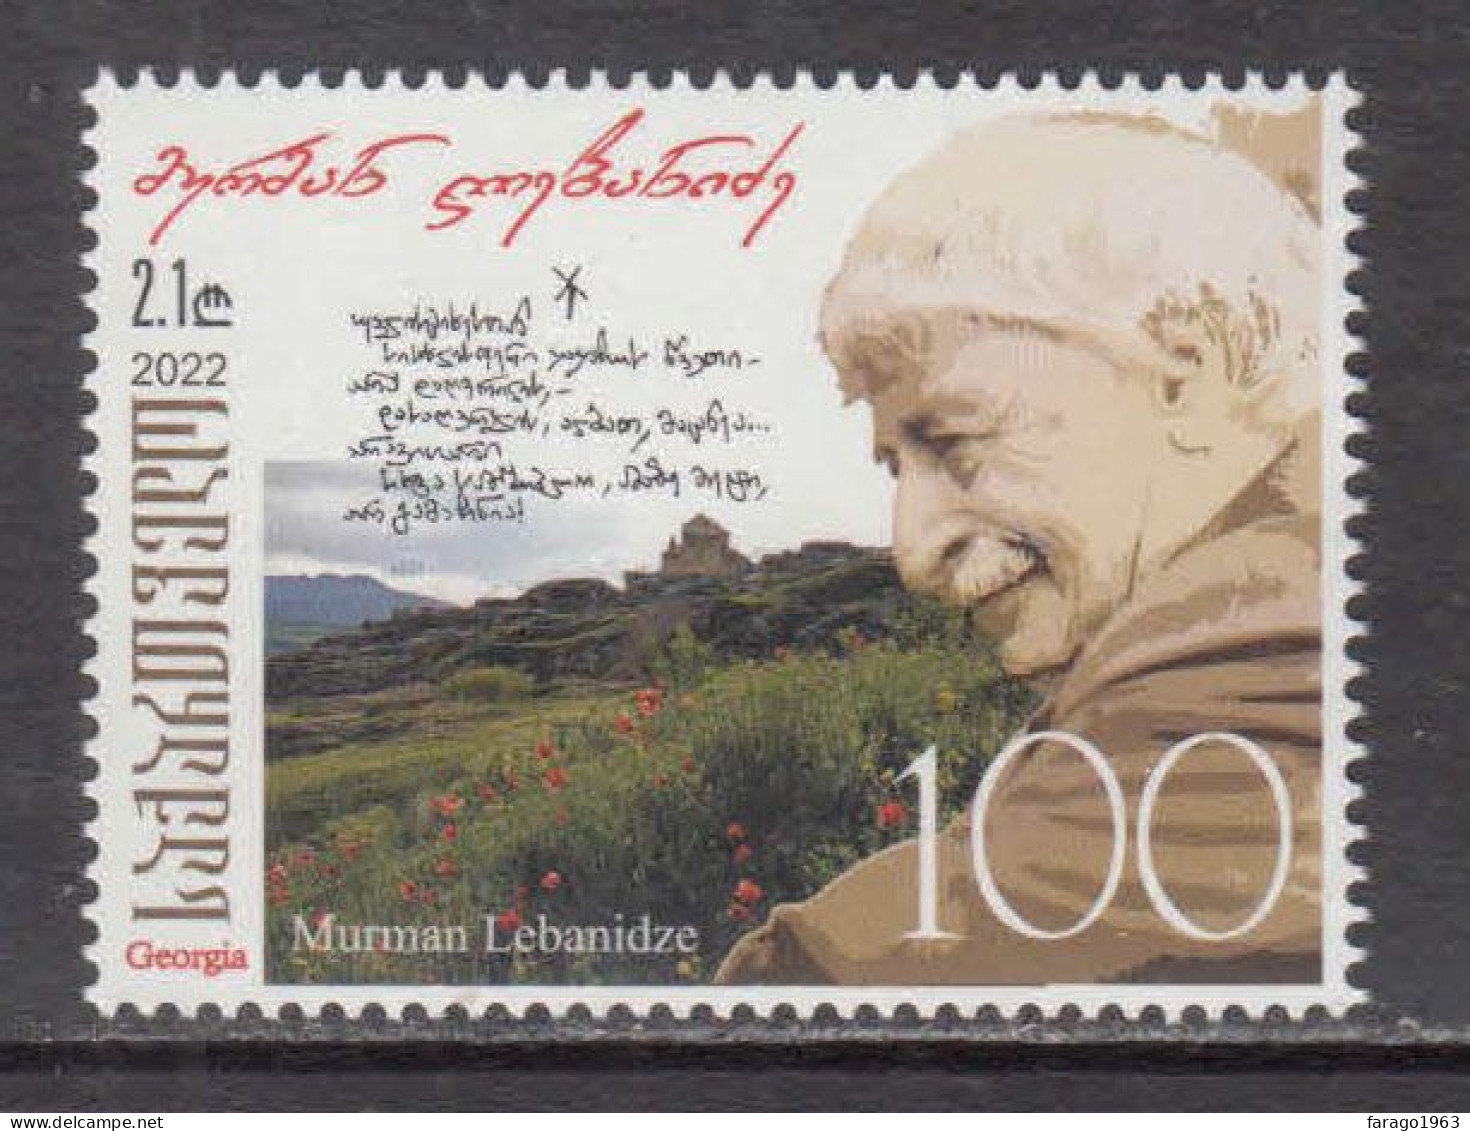 2022 Georgia 100th Anniversary Of The Birth Of Murman Lebanidze, 1922-2002 Complete Set Of 1 MNH - Georgien